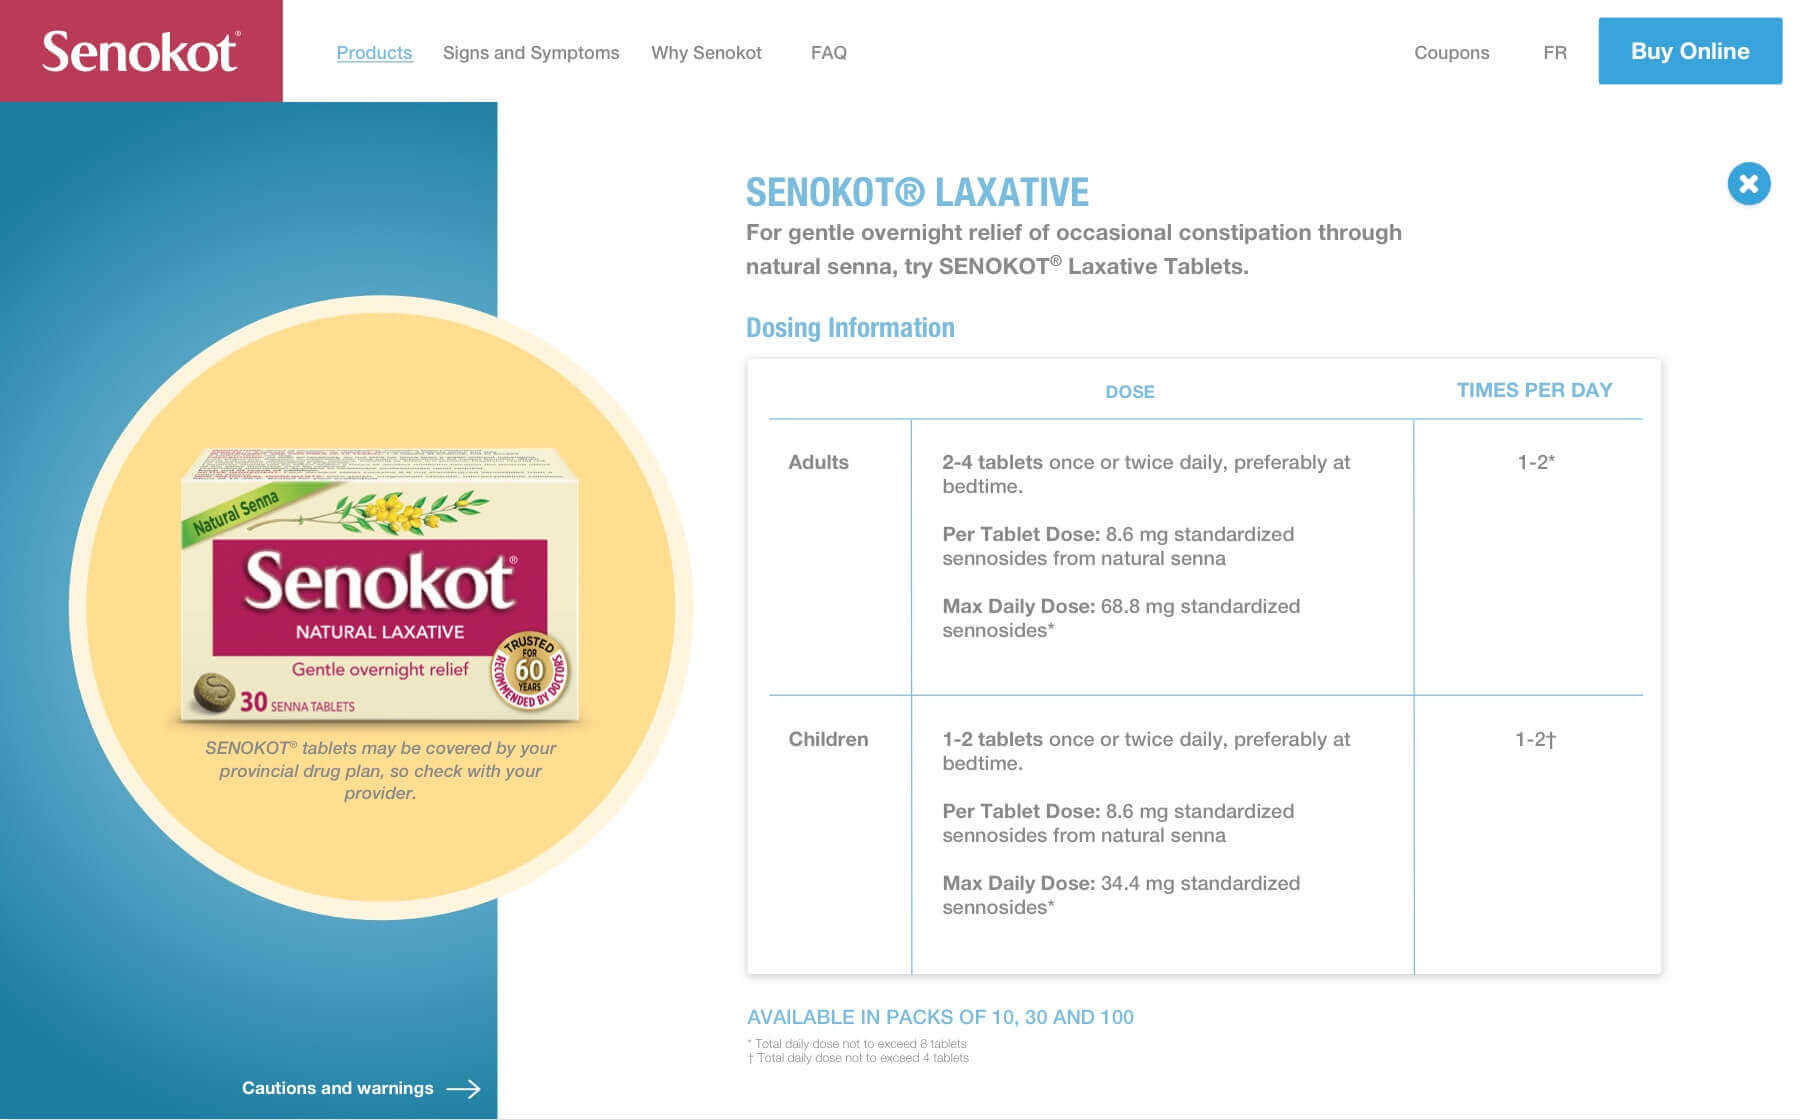 Senokot website products image two